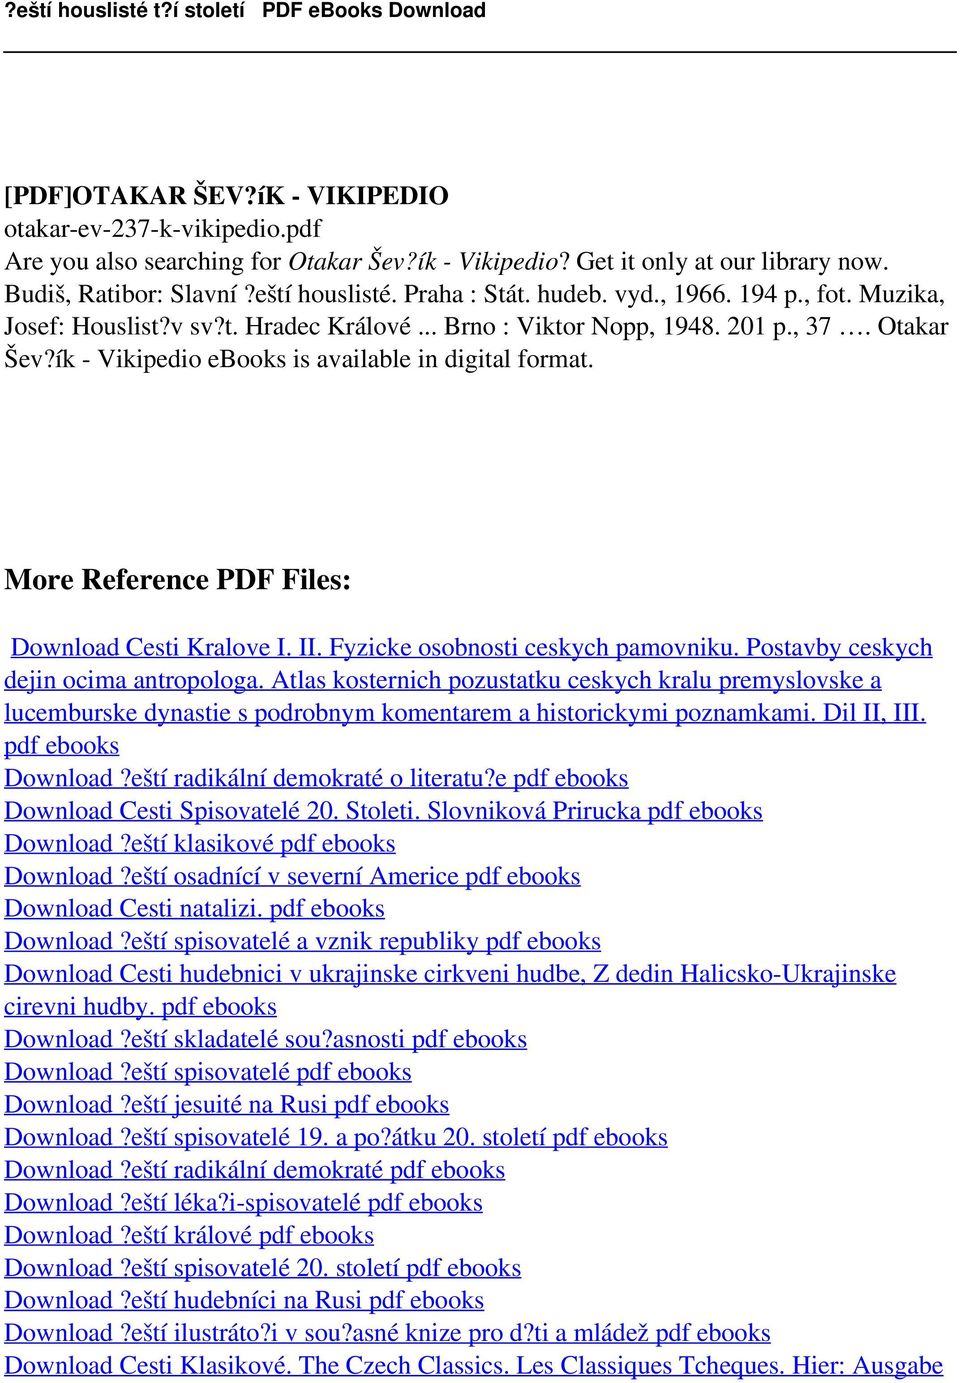 ík - Vikipedio ebooks is available in More Reference PDF Files: Download Cesti Kralove I. II. Fyzicke osobnosti ceskych pamovniku. Postavby ceskych dejin ocima antropologa.